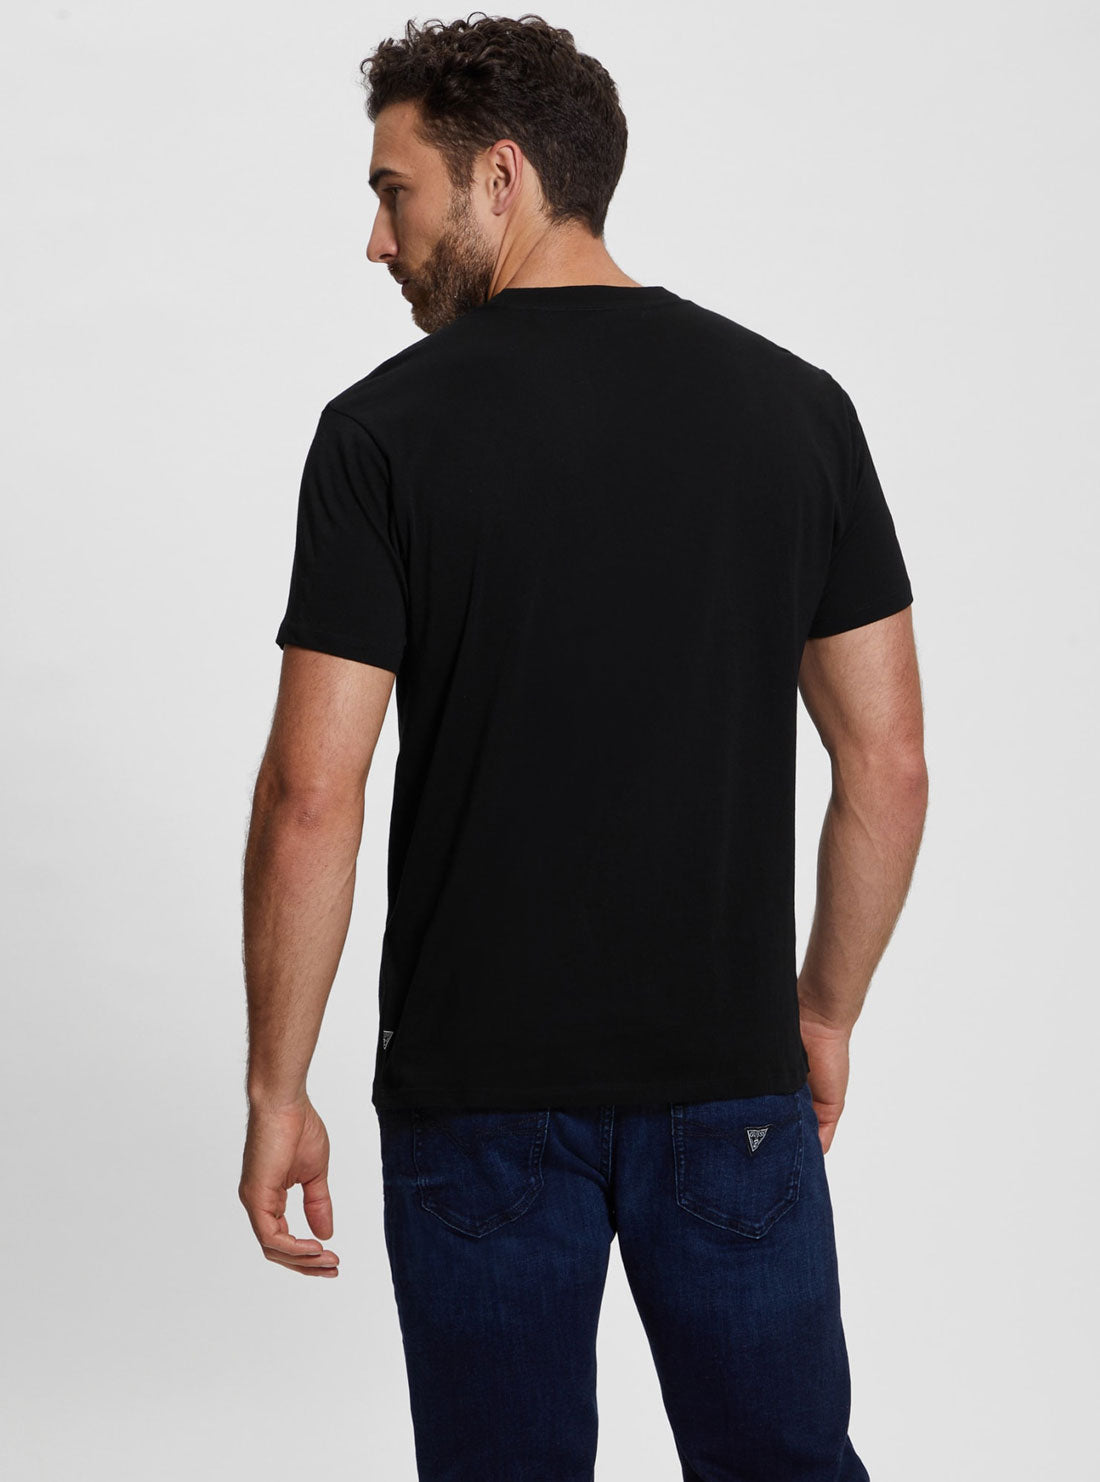 GUESS Black Short Sleeve LA T-Shirt back view